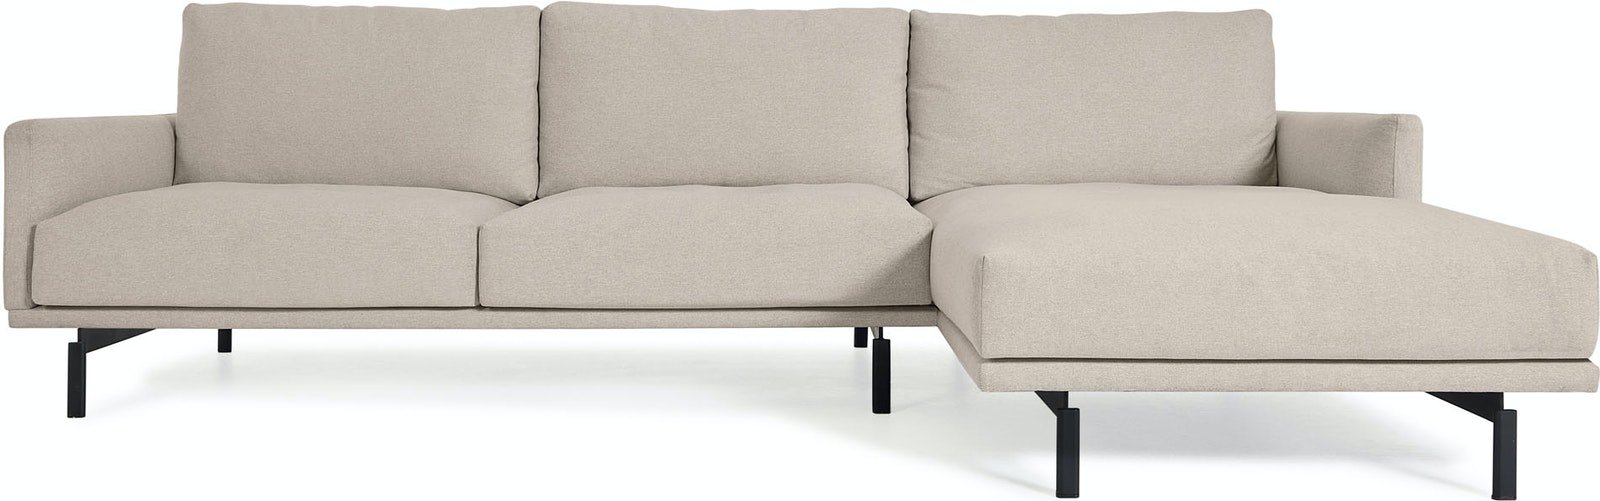 Galene, Højre chaiselong, 3-personers sofa, nordisk, polstret by LaForma (H: 94 cm. B: 254 cm. L: 166 cm., Beige)